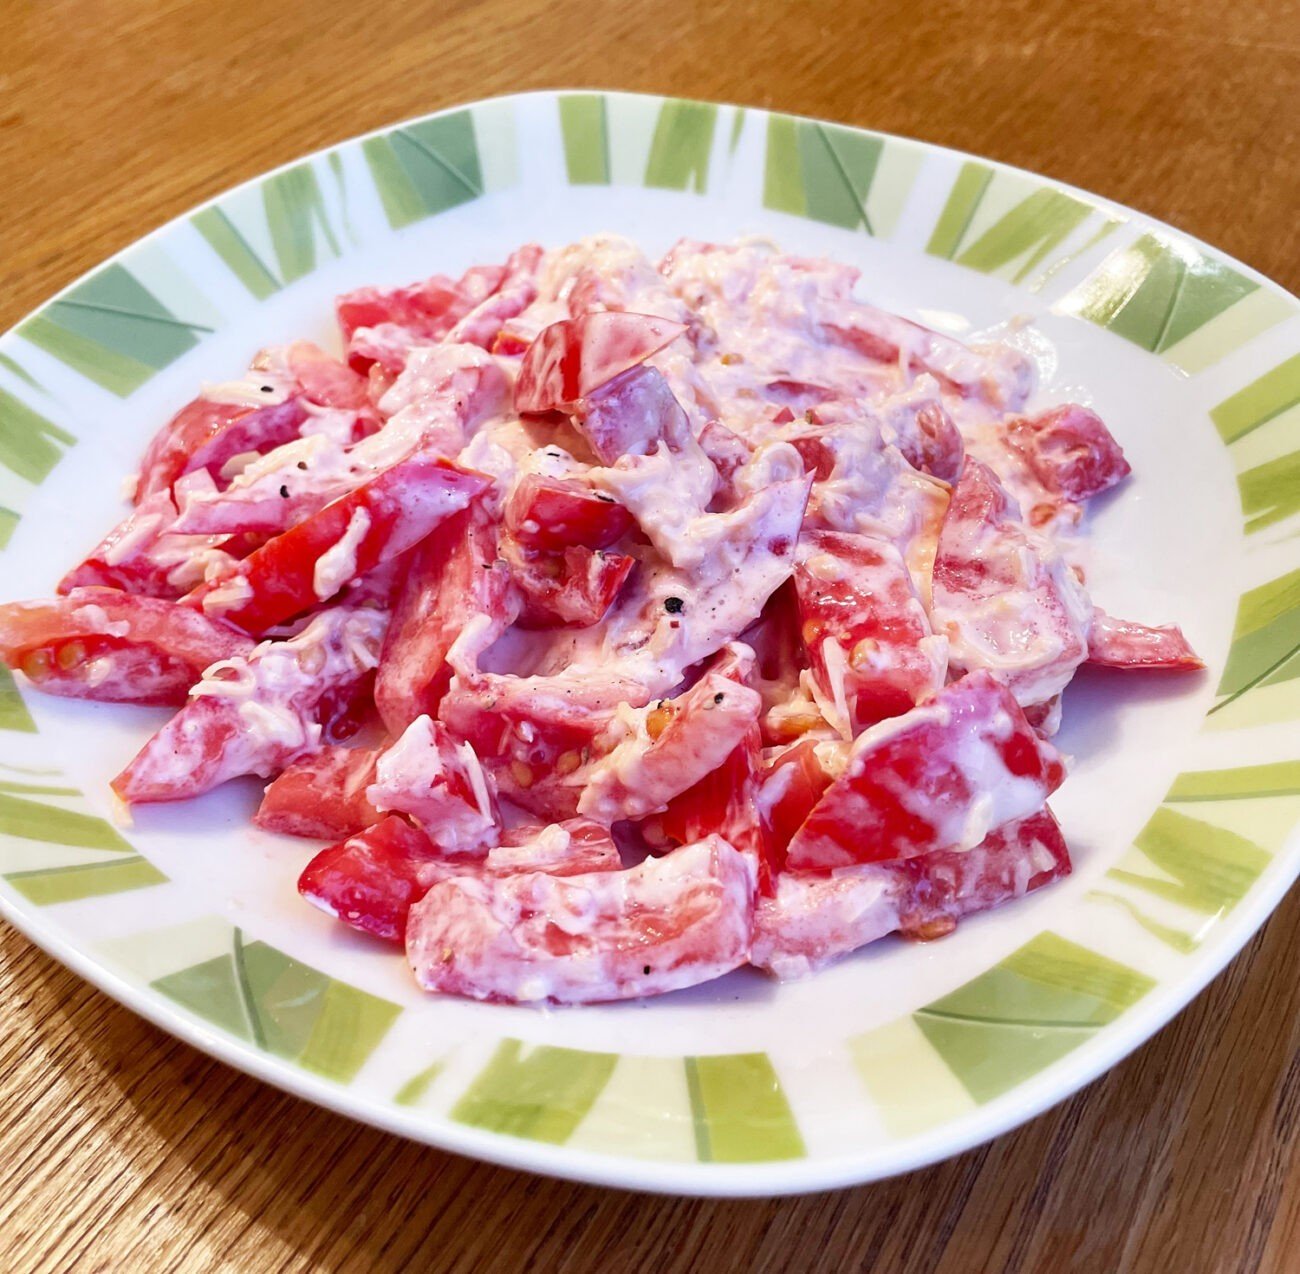 salat iz pomidorov s chesnokom i smetanoj 8ca4443 - Салат из помидоров с чесноком и сметаной